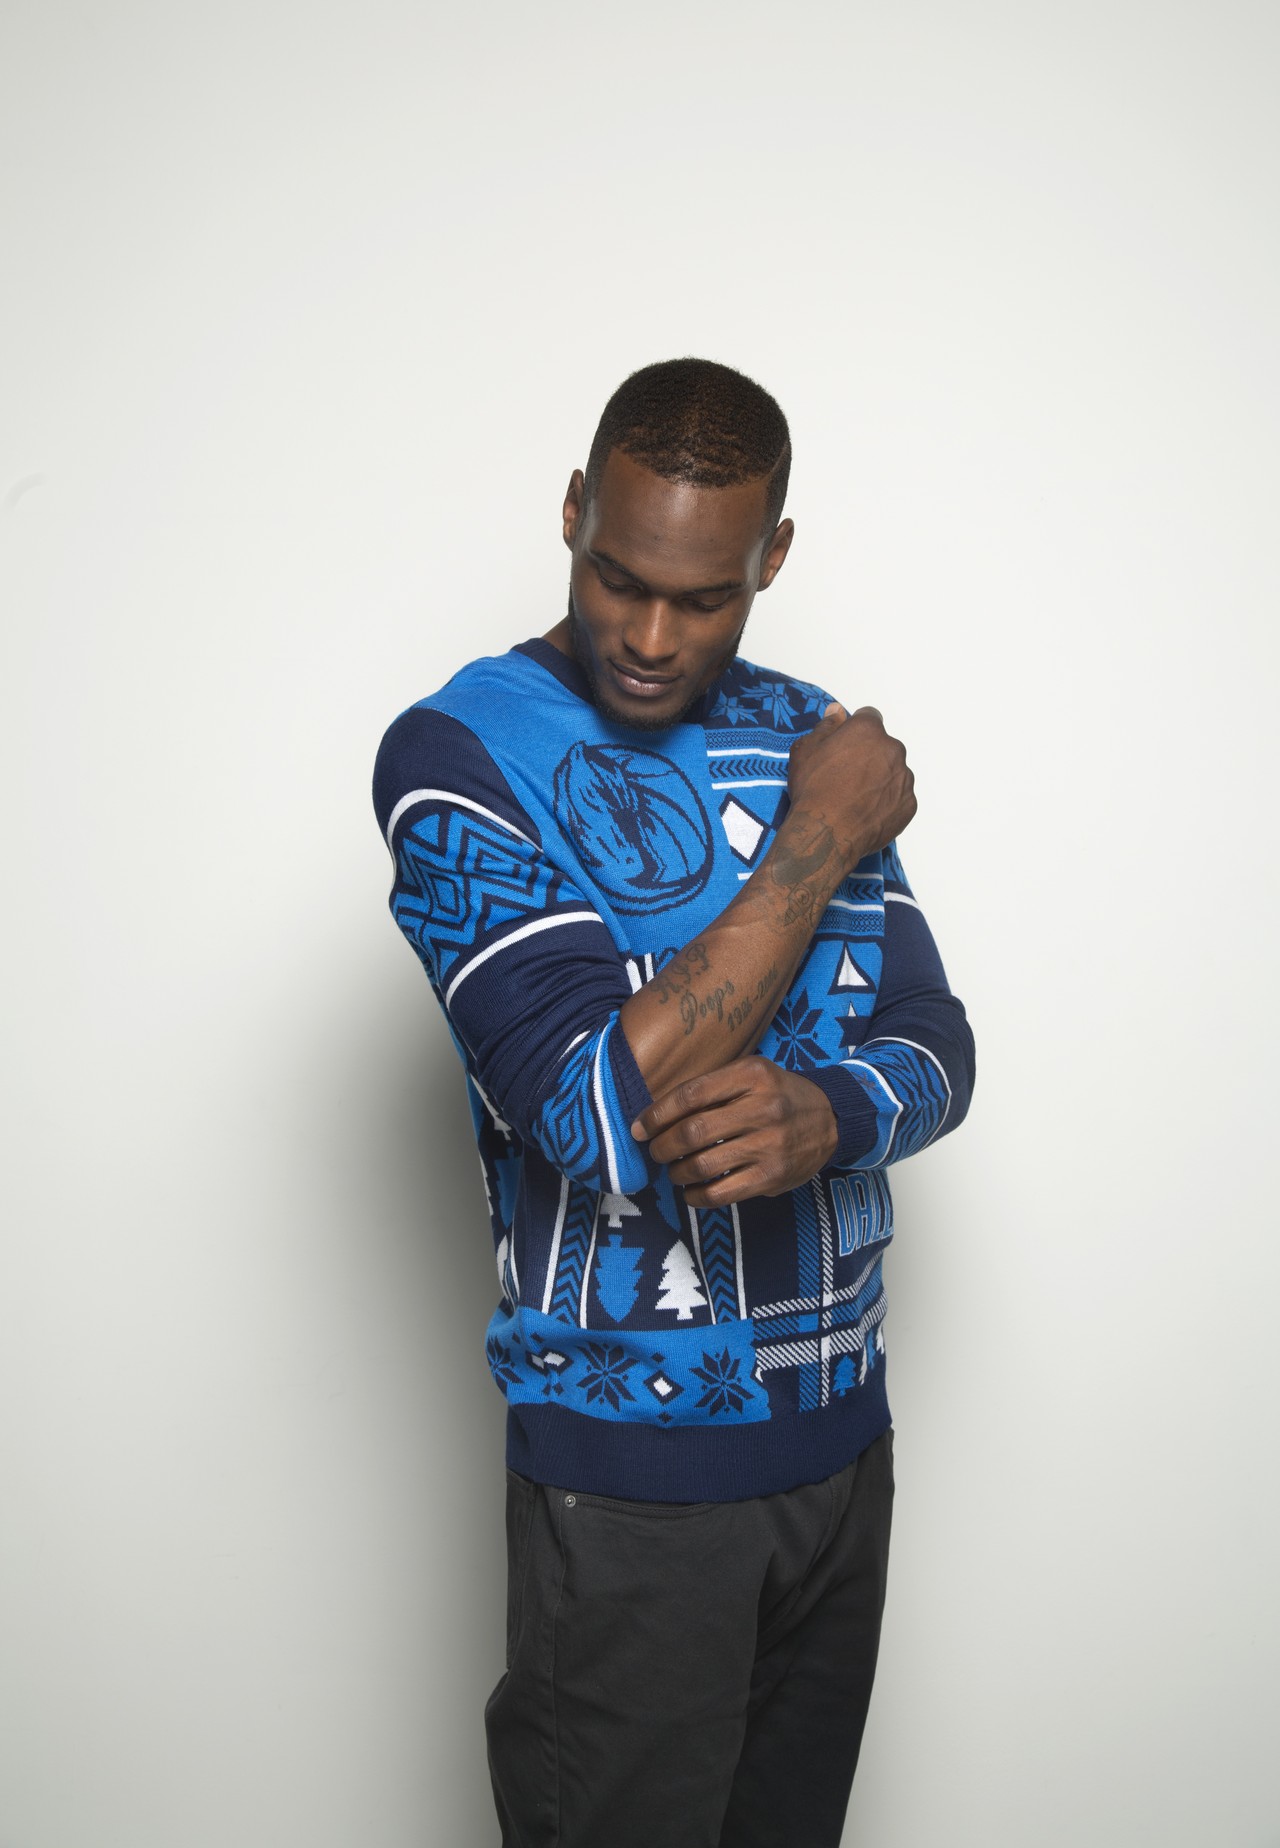 Idee Regali Natale 2015: NBA Ugly Sweater, i colorati maglioni natalizi targati NBA